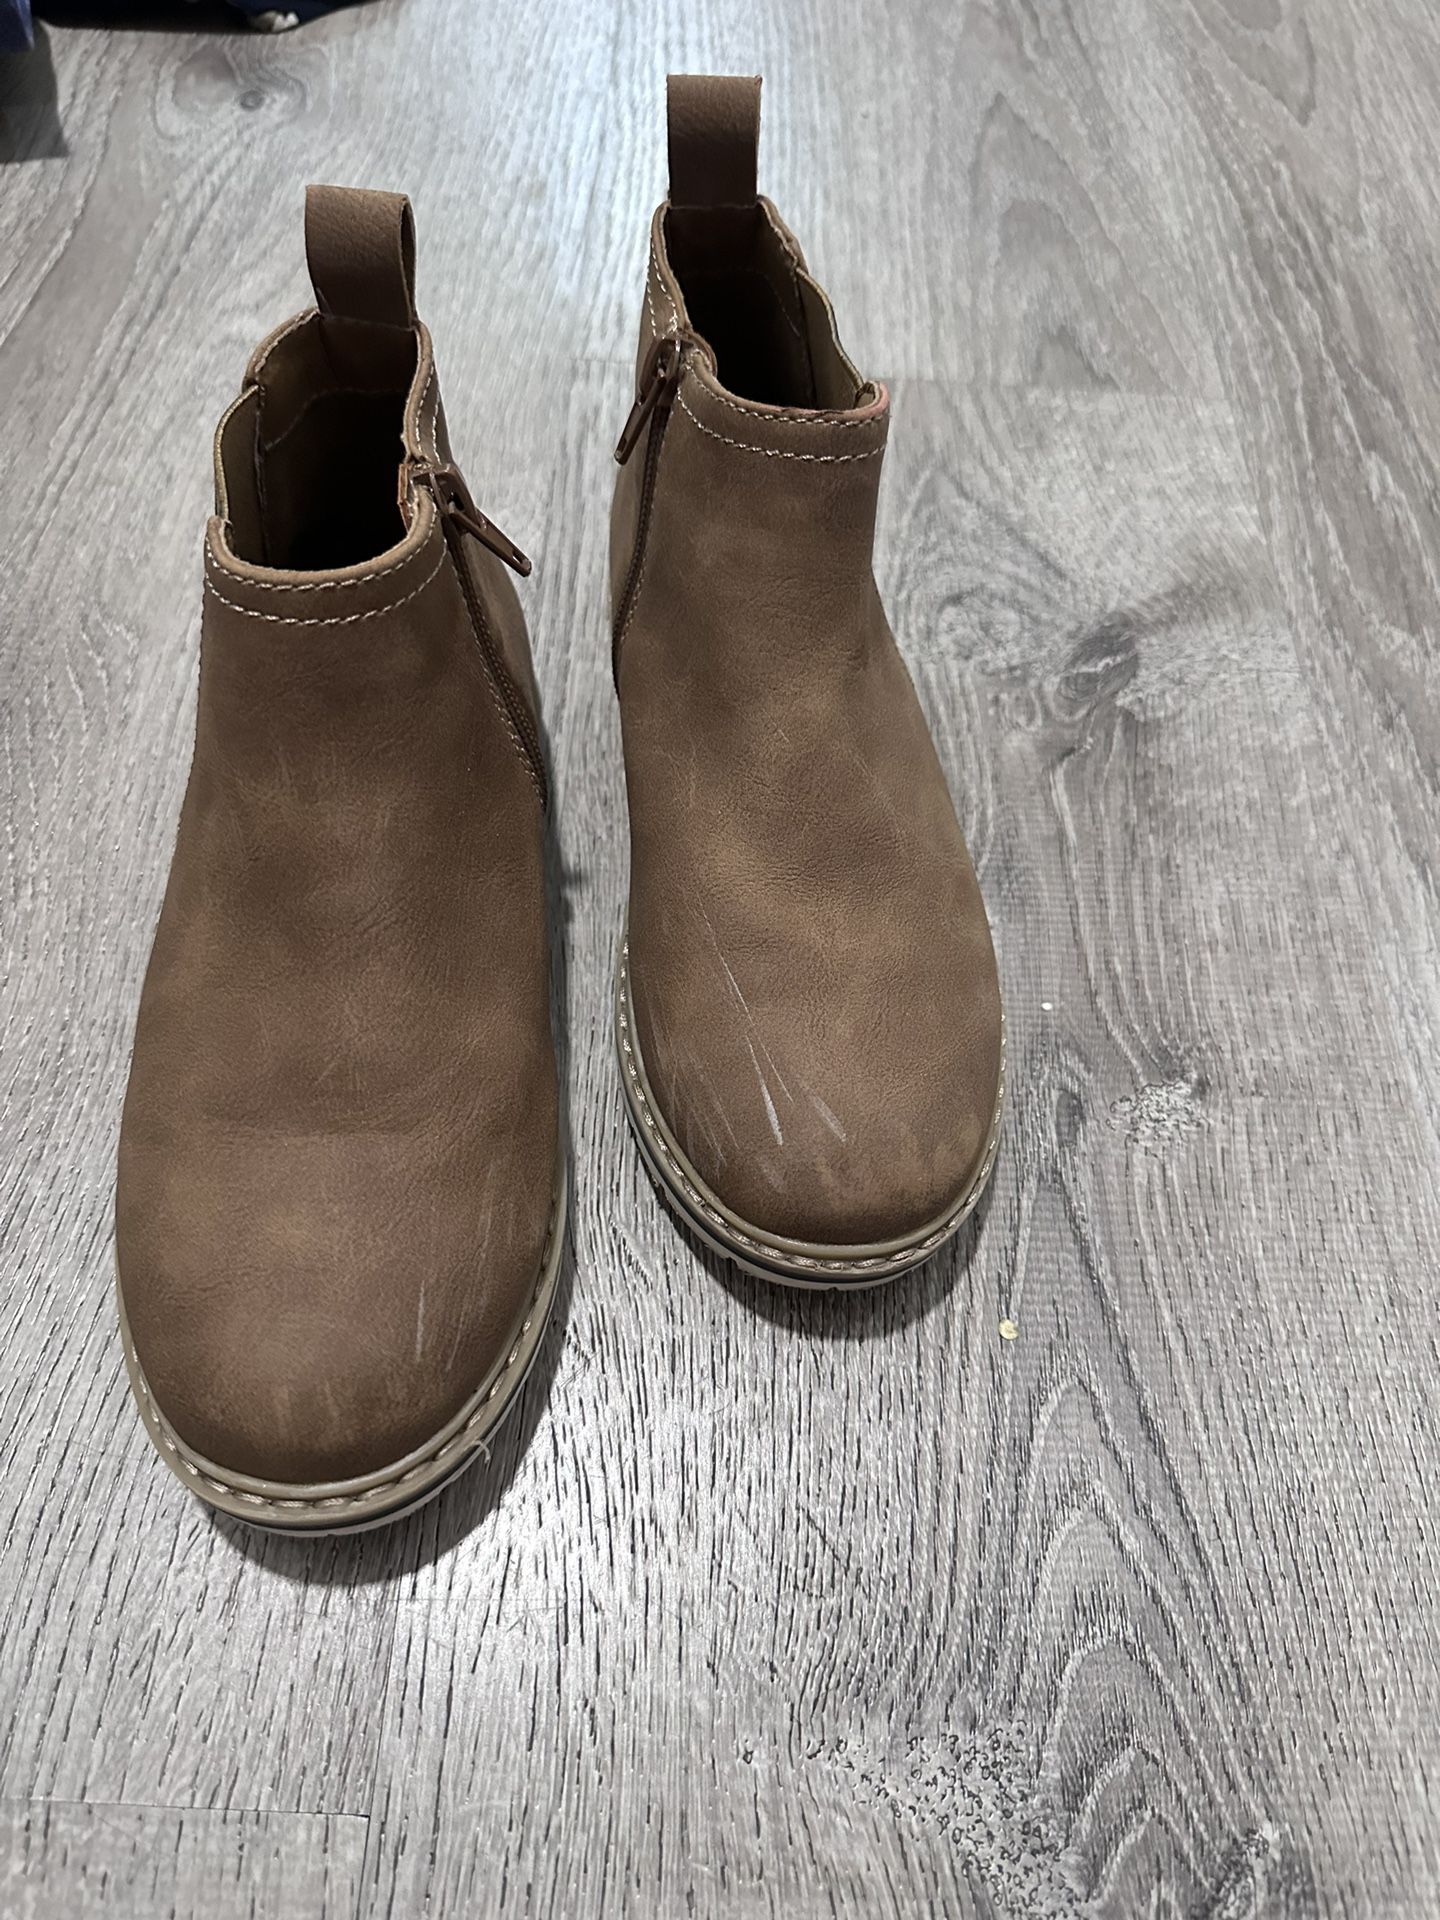 Nordstrom Little Kids Boots , Preloved , Size:3 Price:$19